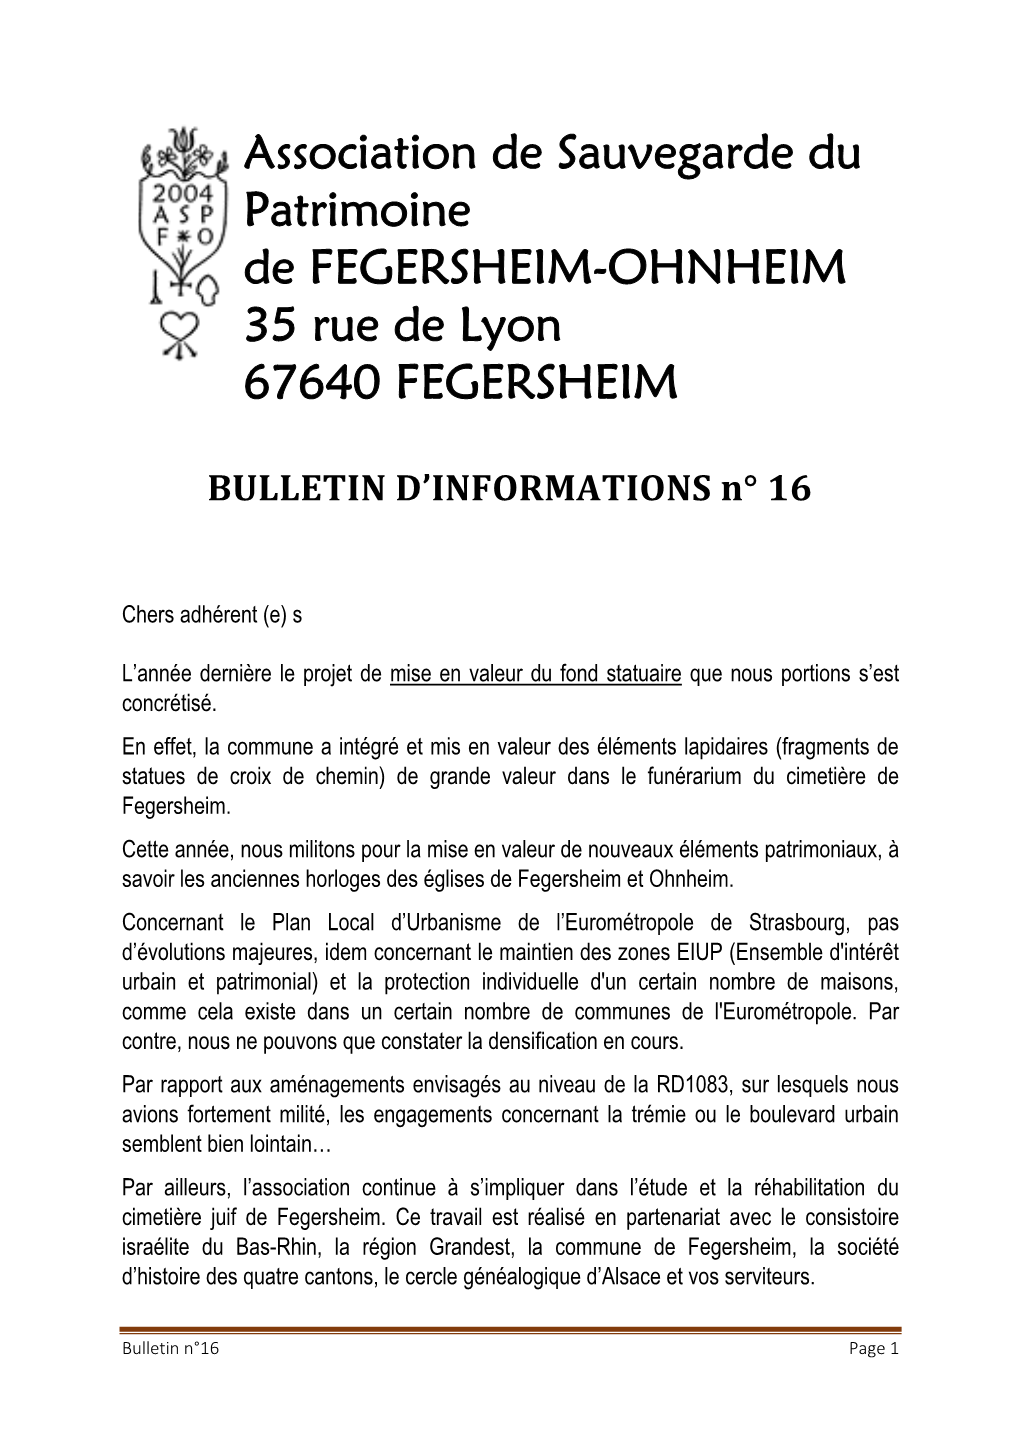 Association De Sauvegarde Du Patrimoine De FEGERSHEIM-OHNHEIM 35 Rue De Lyon 67640 FEGERSHEIM